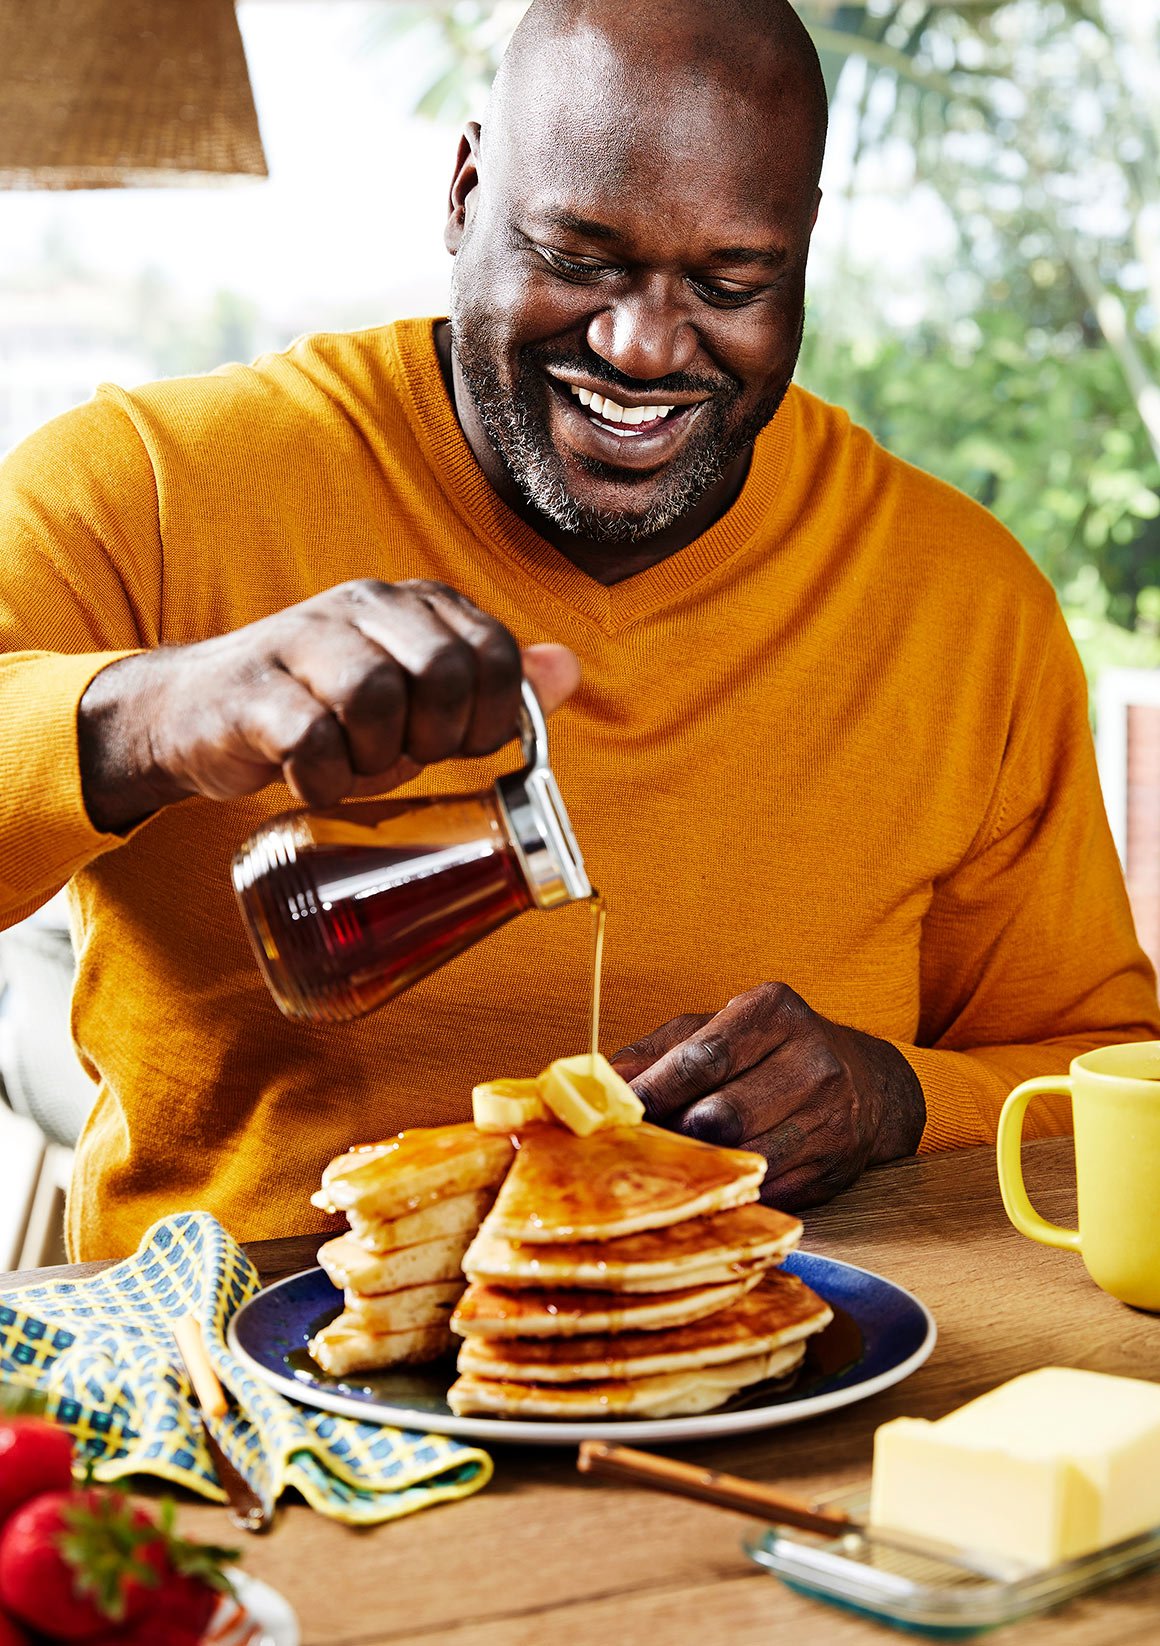 celebrity-portrait-Shaq-eating-Pancakes-breakfast-recipe.jpg